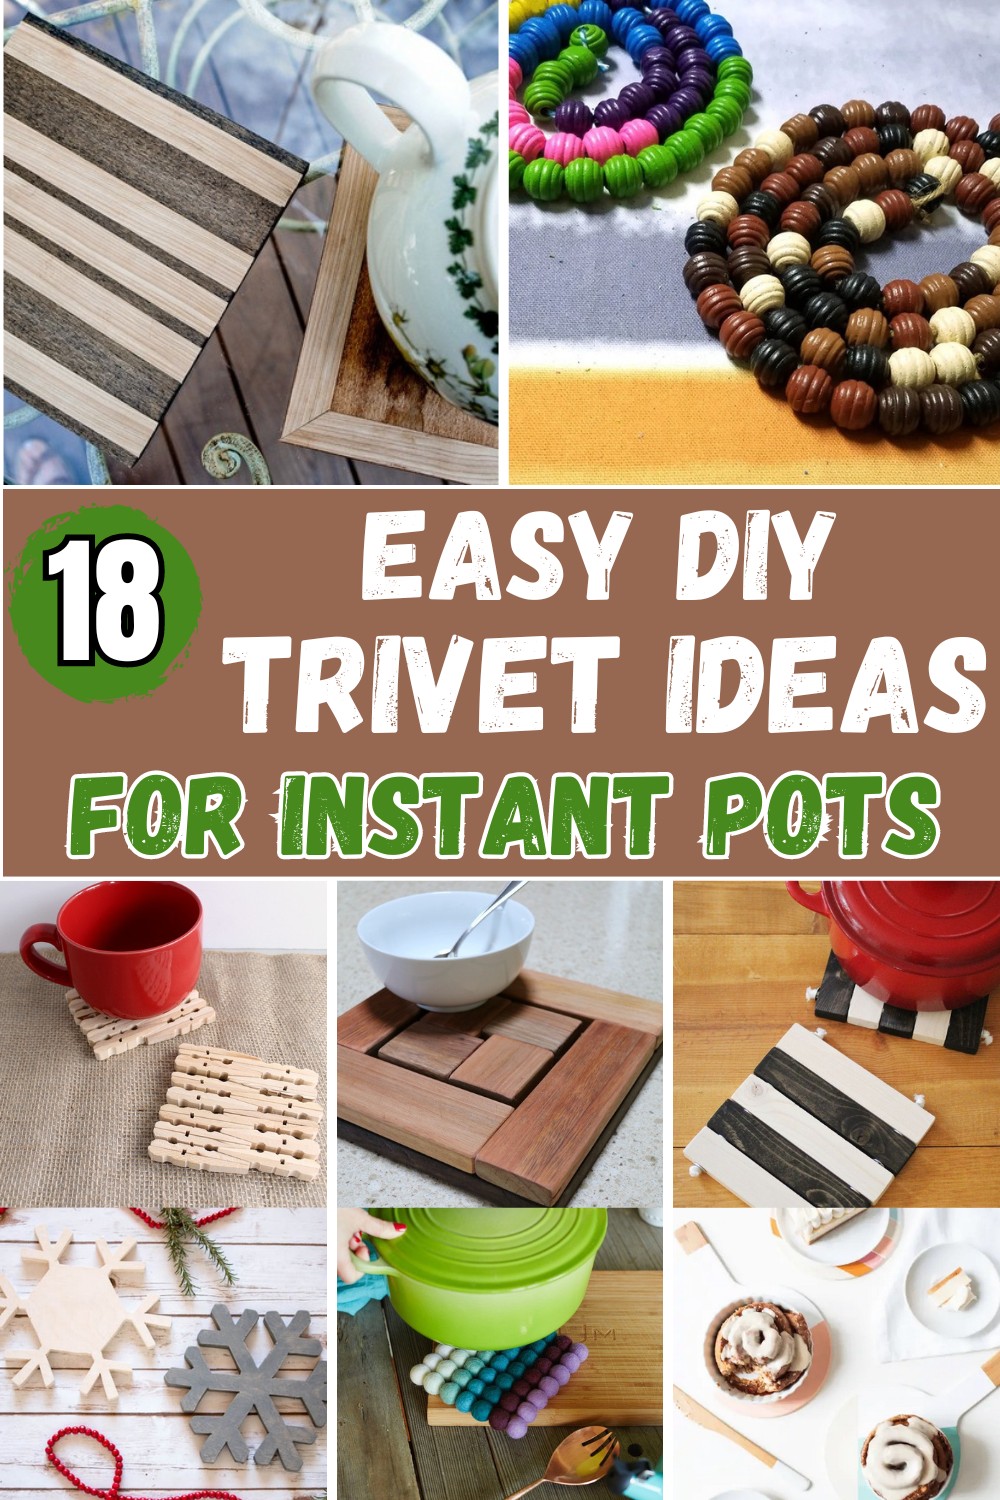 Easy DIY Trivet Ideas